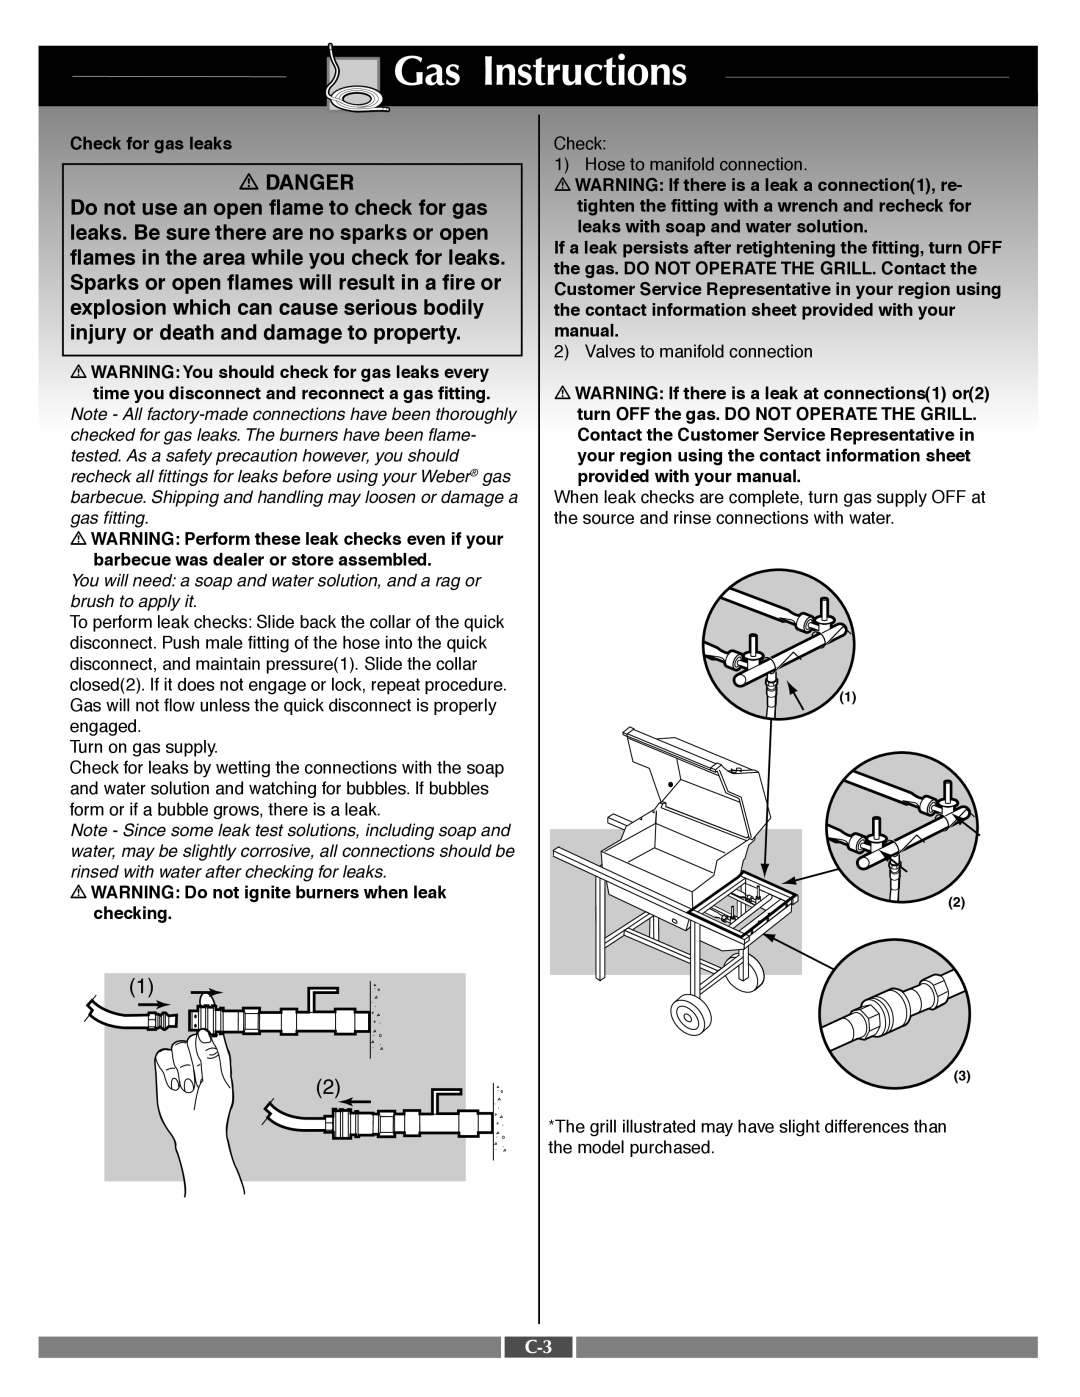 Weber 55548 manual Gas Instructions, Danger 